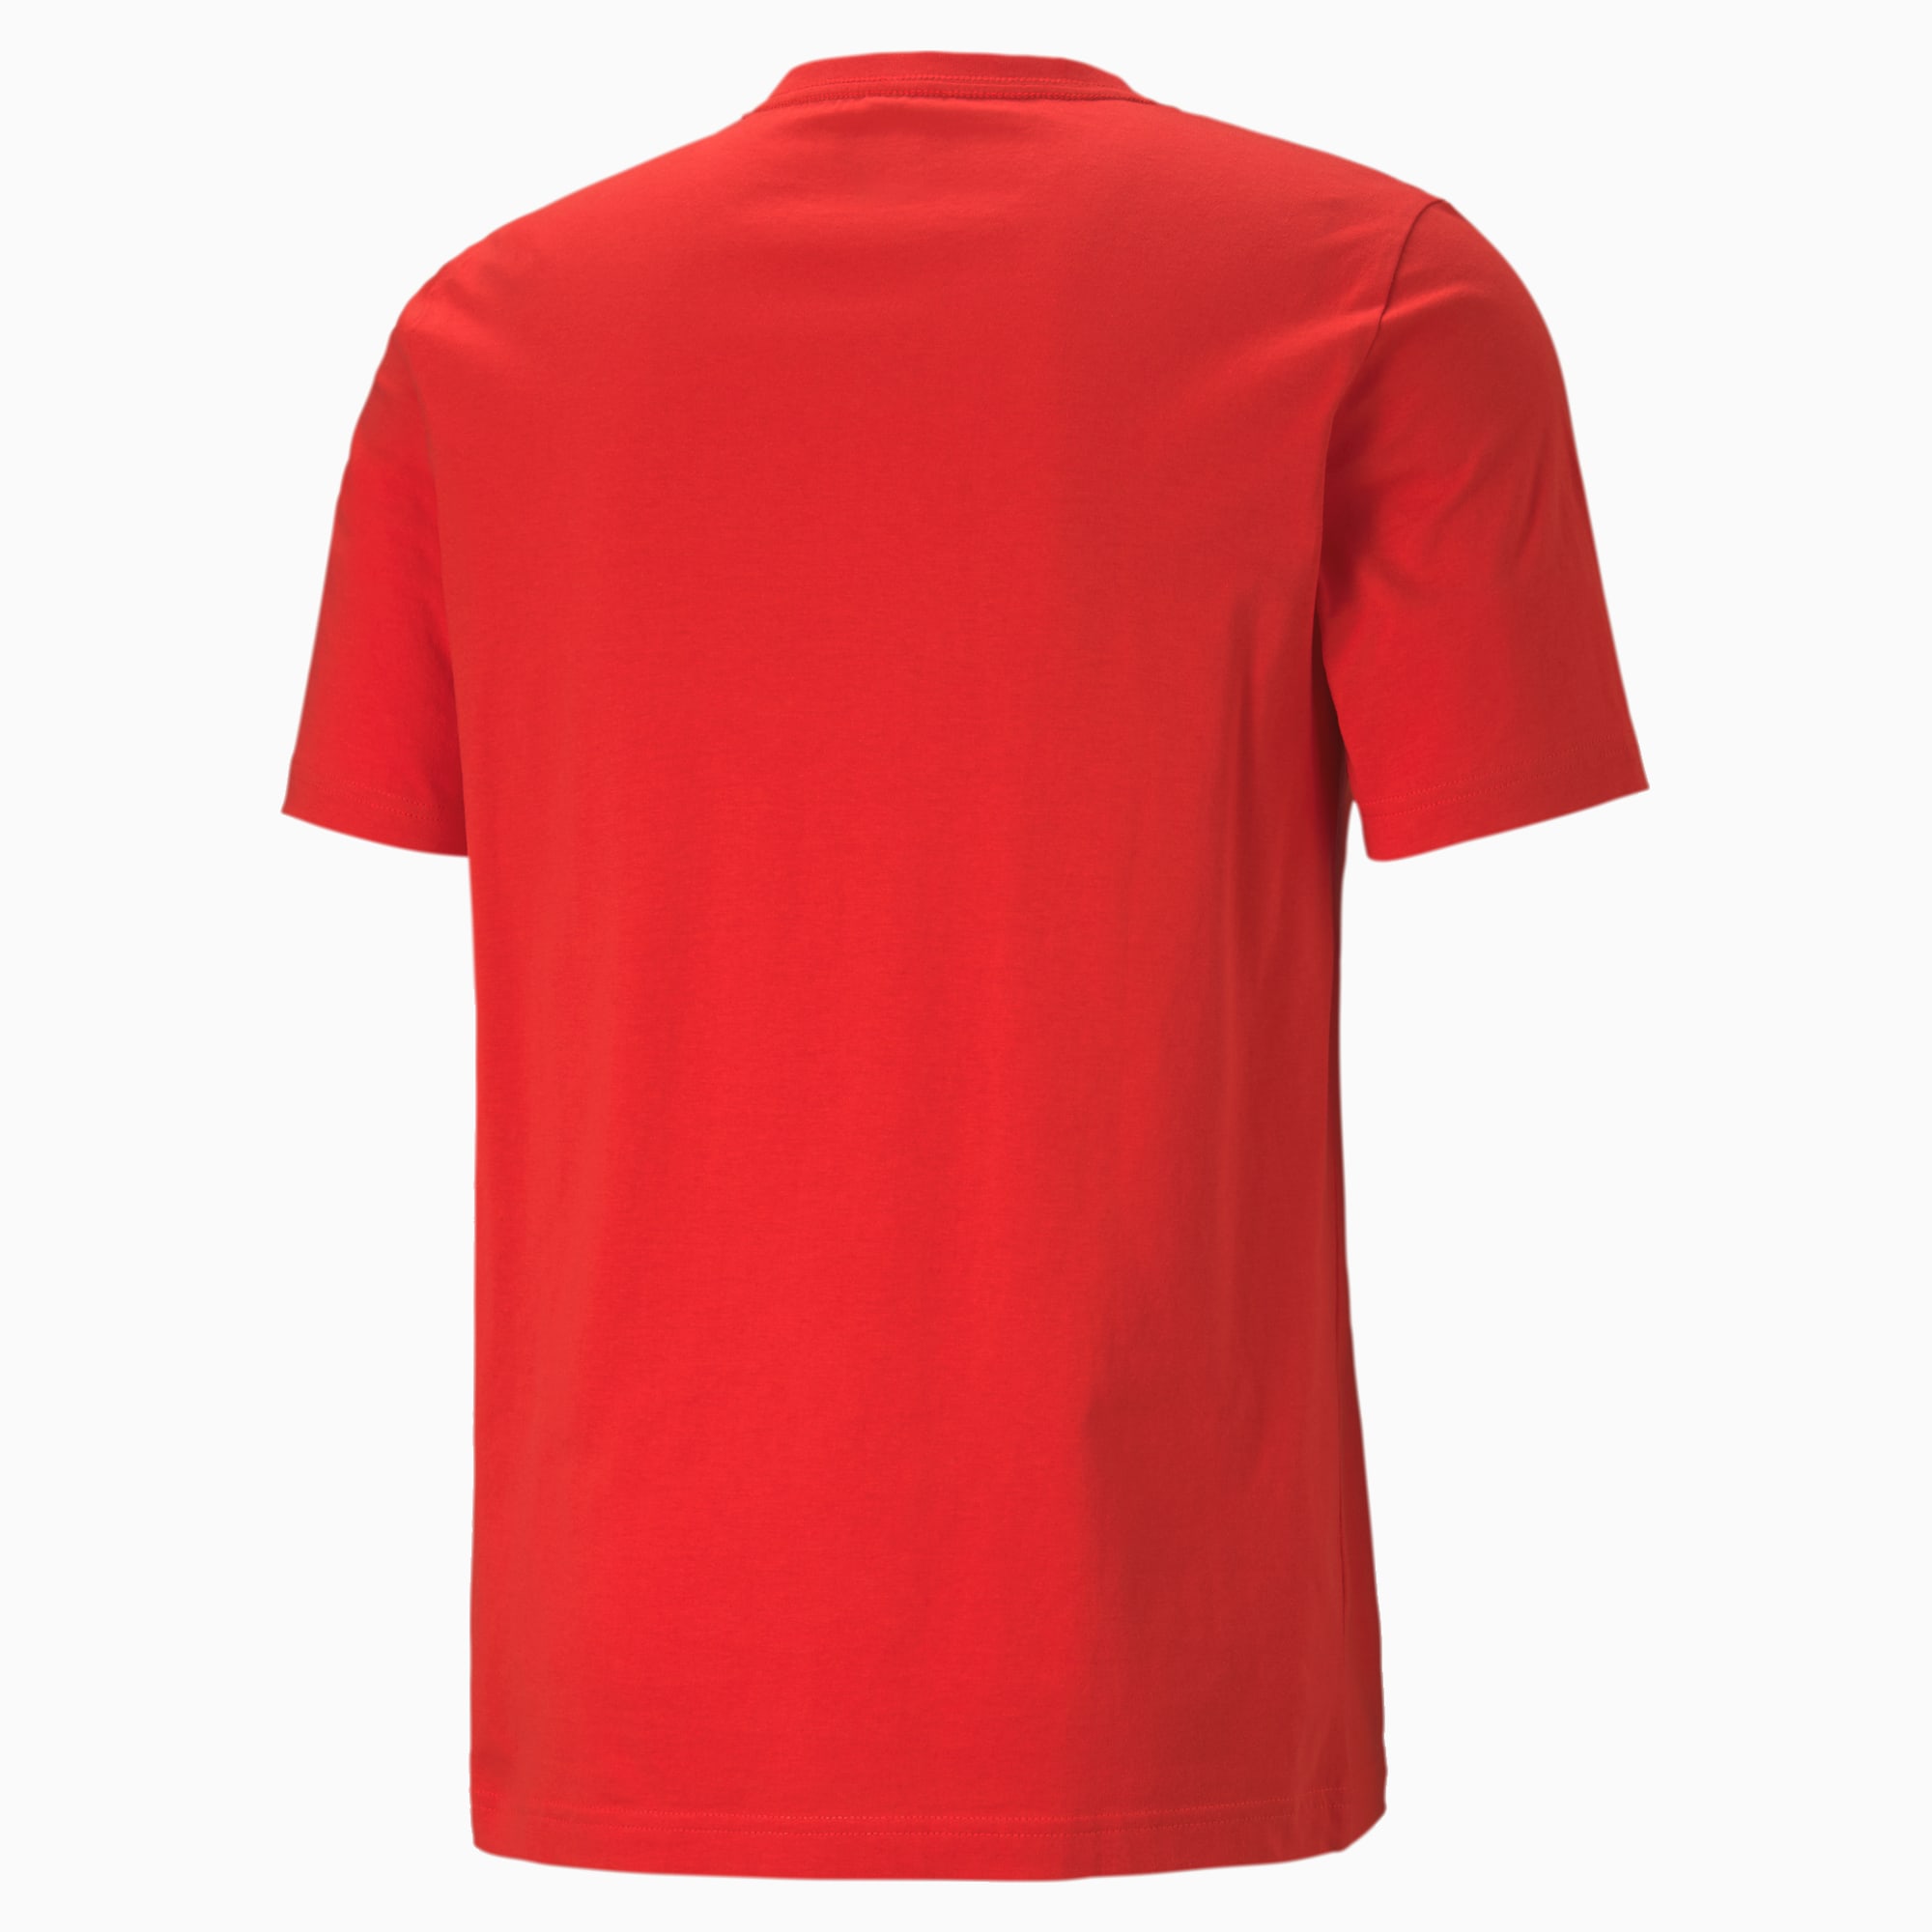 PUMA Essentials+ 2 Colour Logo Men's T-Shirt, High Risk Red, Size 4XL, Clothing